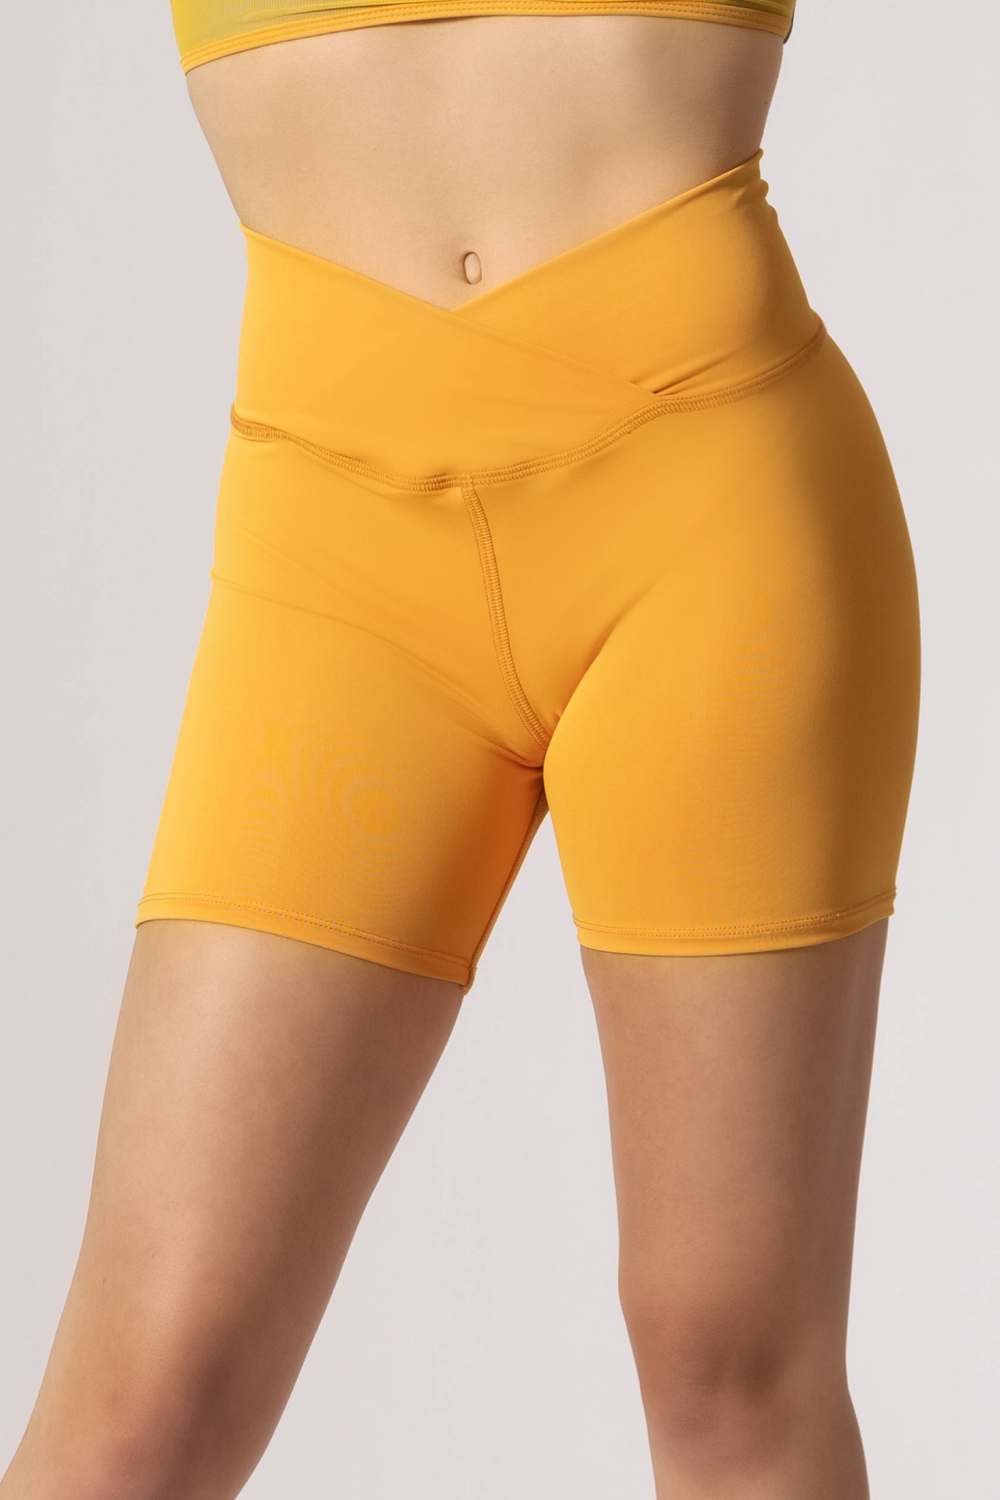 Tiger Friday Online Shop for Hot Cross Triker Shorts - Sunset Dancewear | Size: CXS